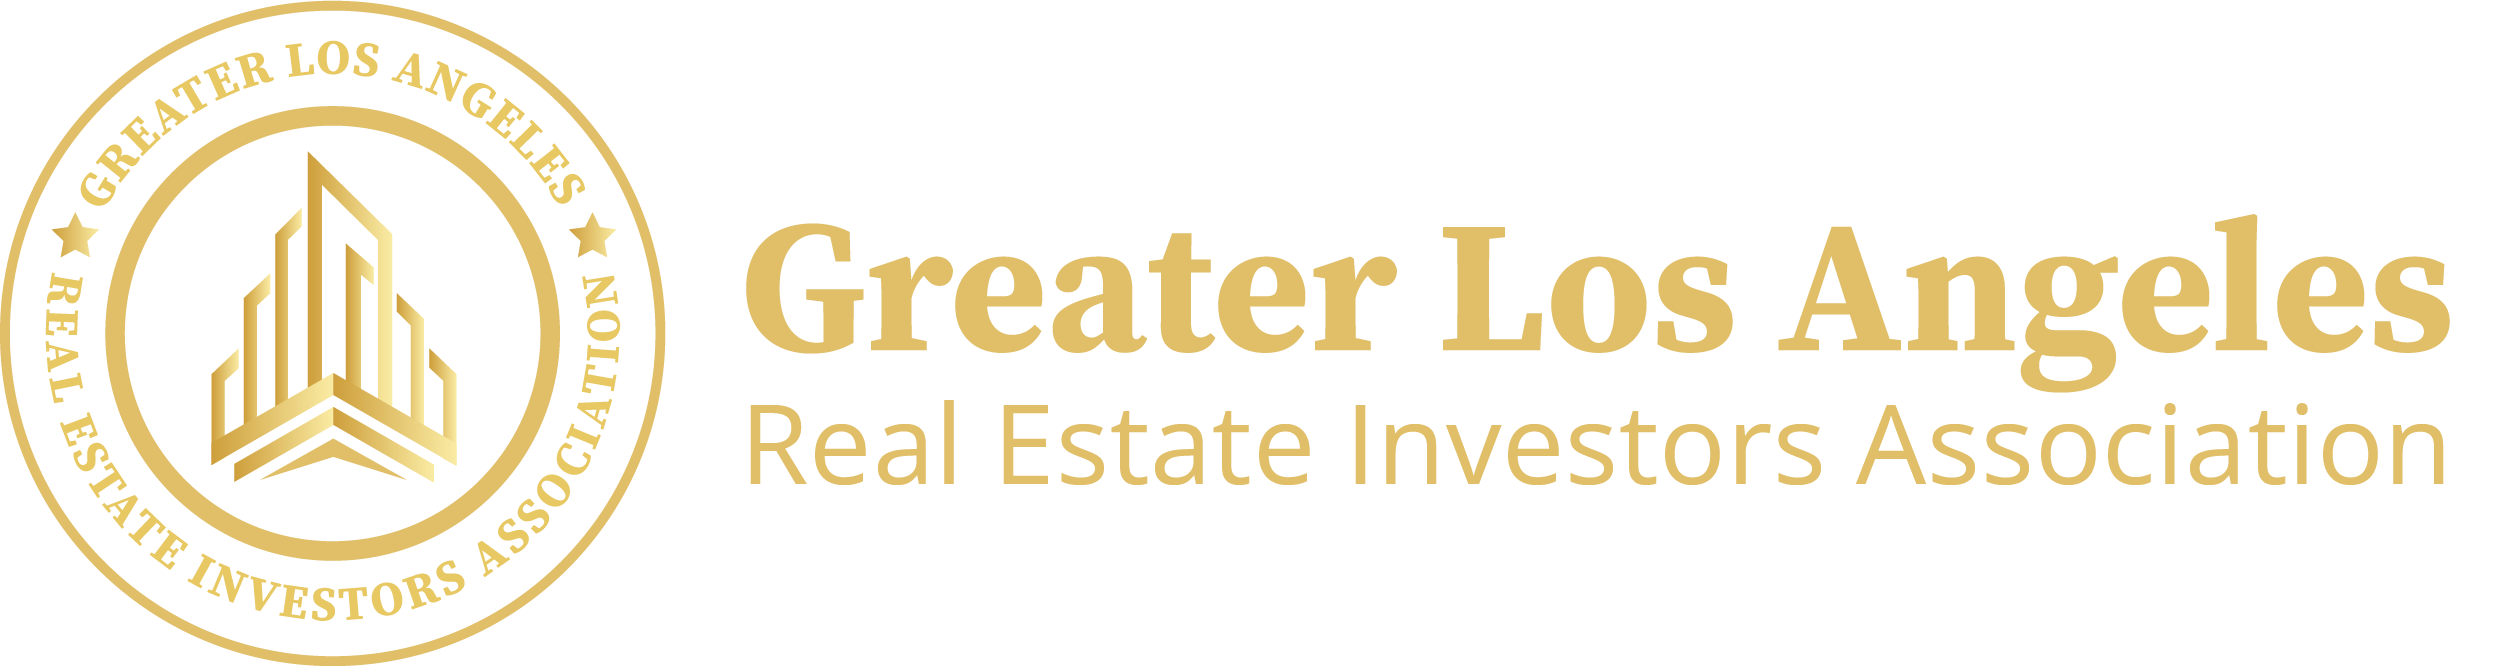 Greater Los Angeles Real Estate Investor Association